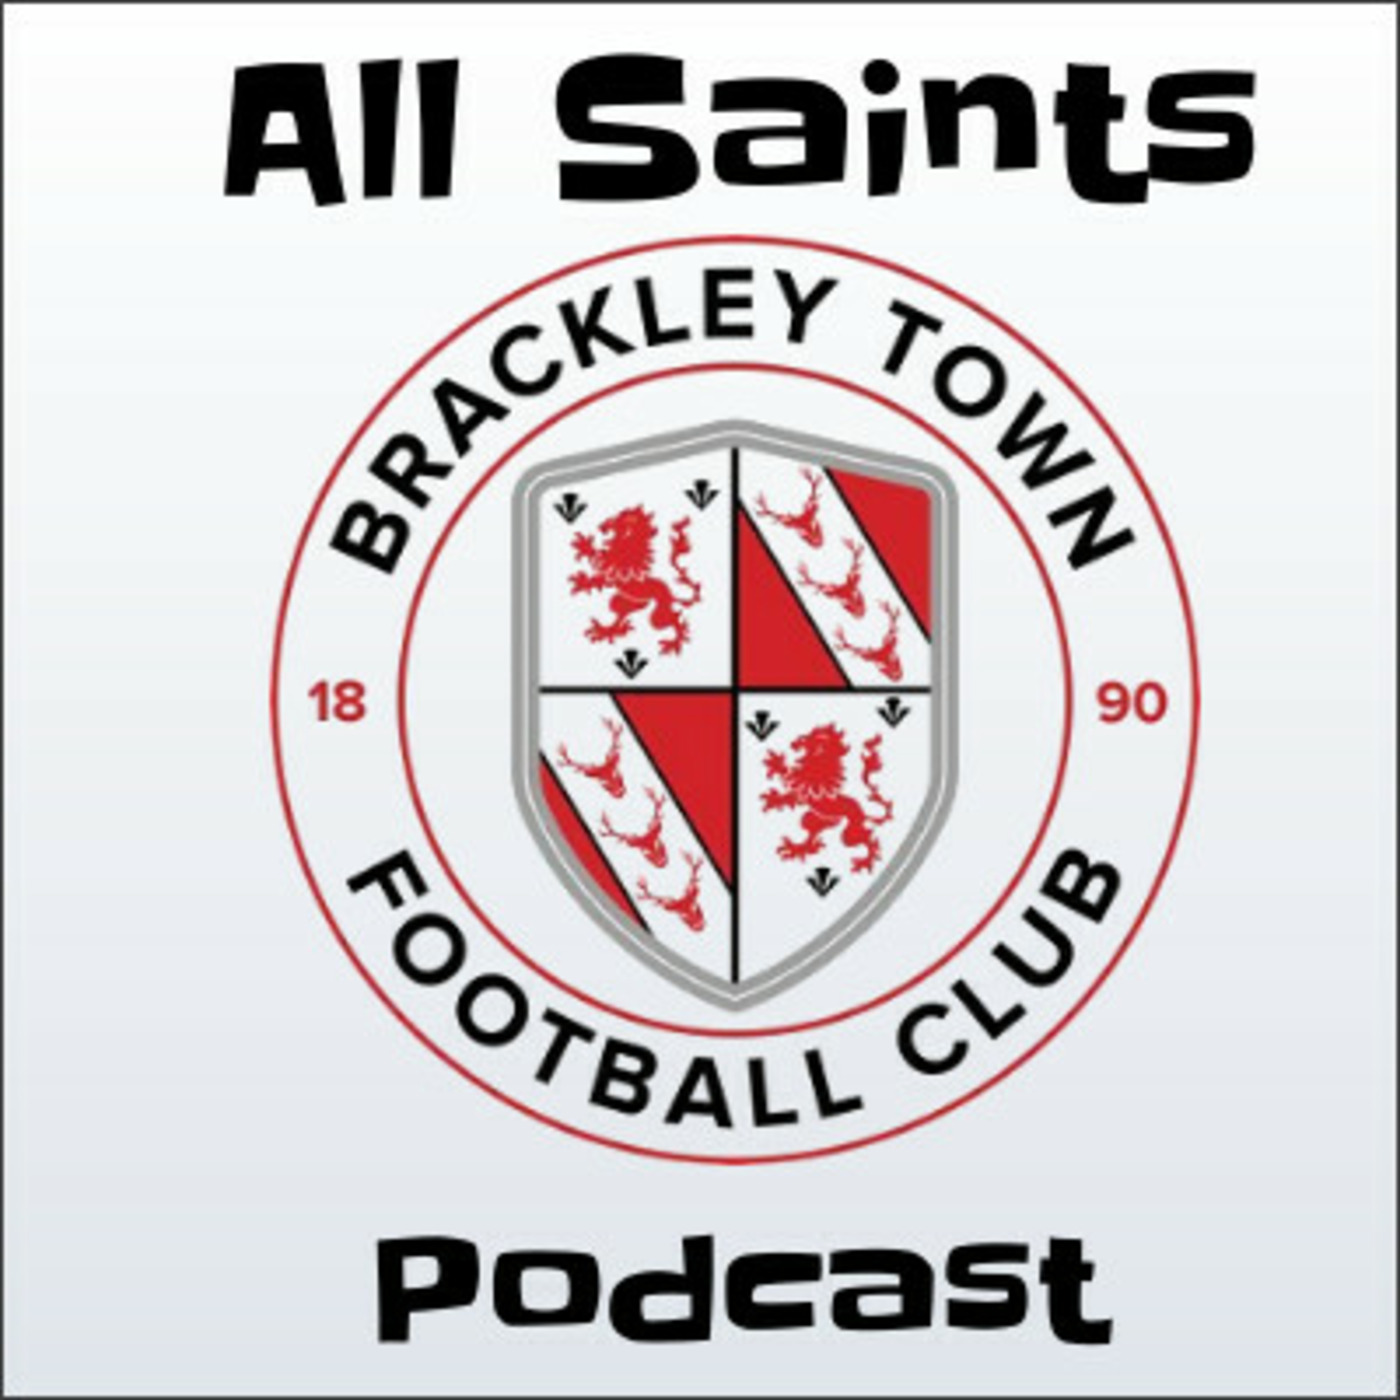 Episode 32: All saints podcast 63